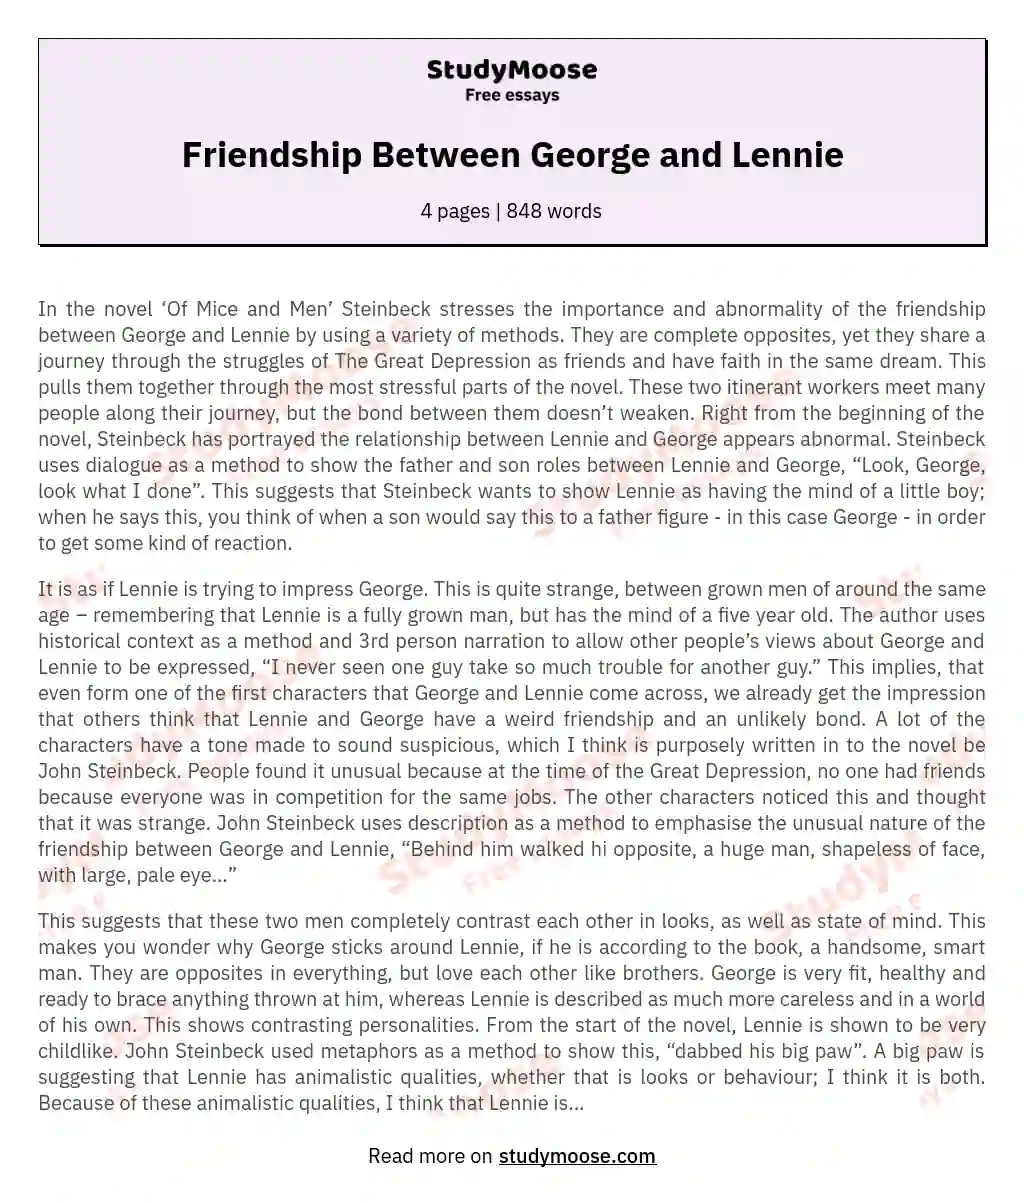 Friendship Between George and Lennie